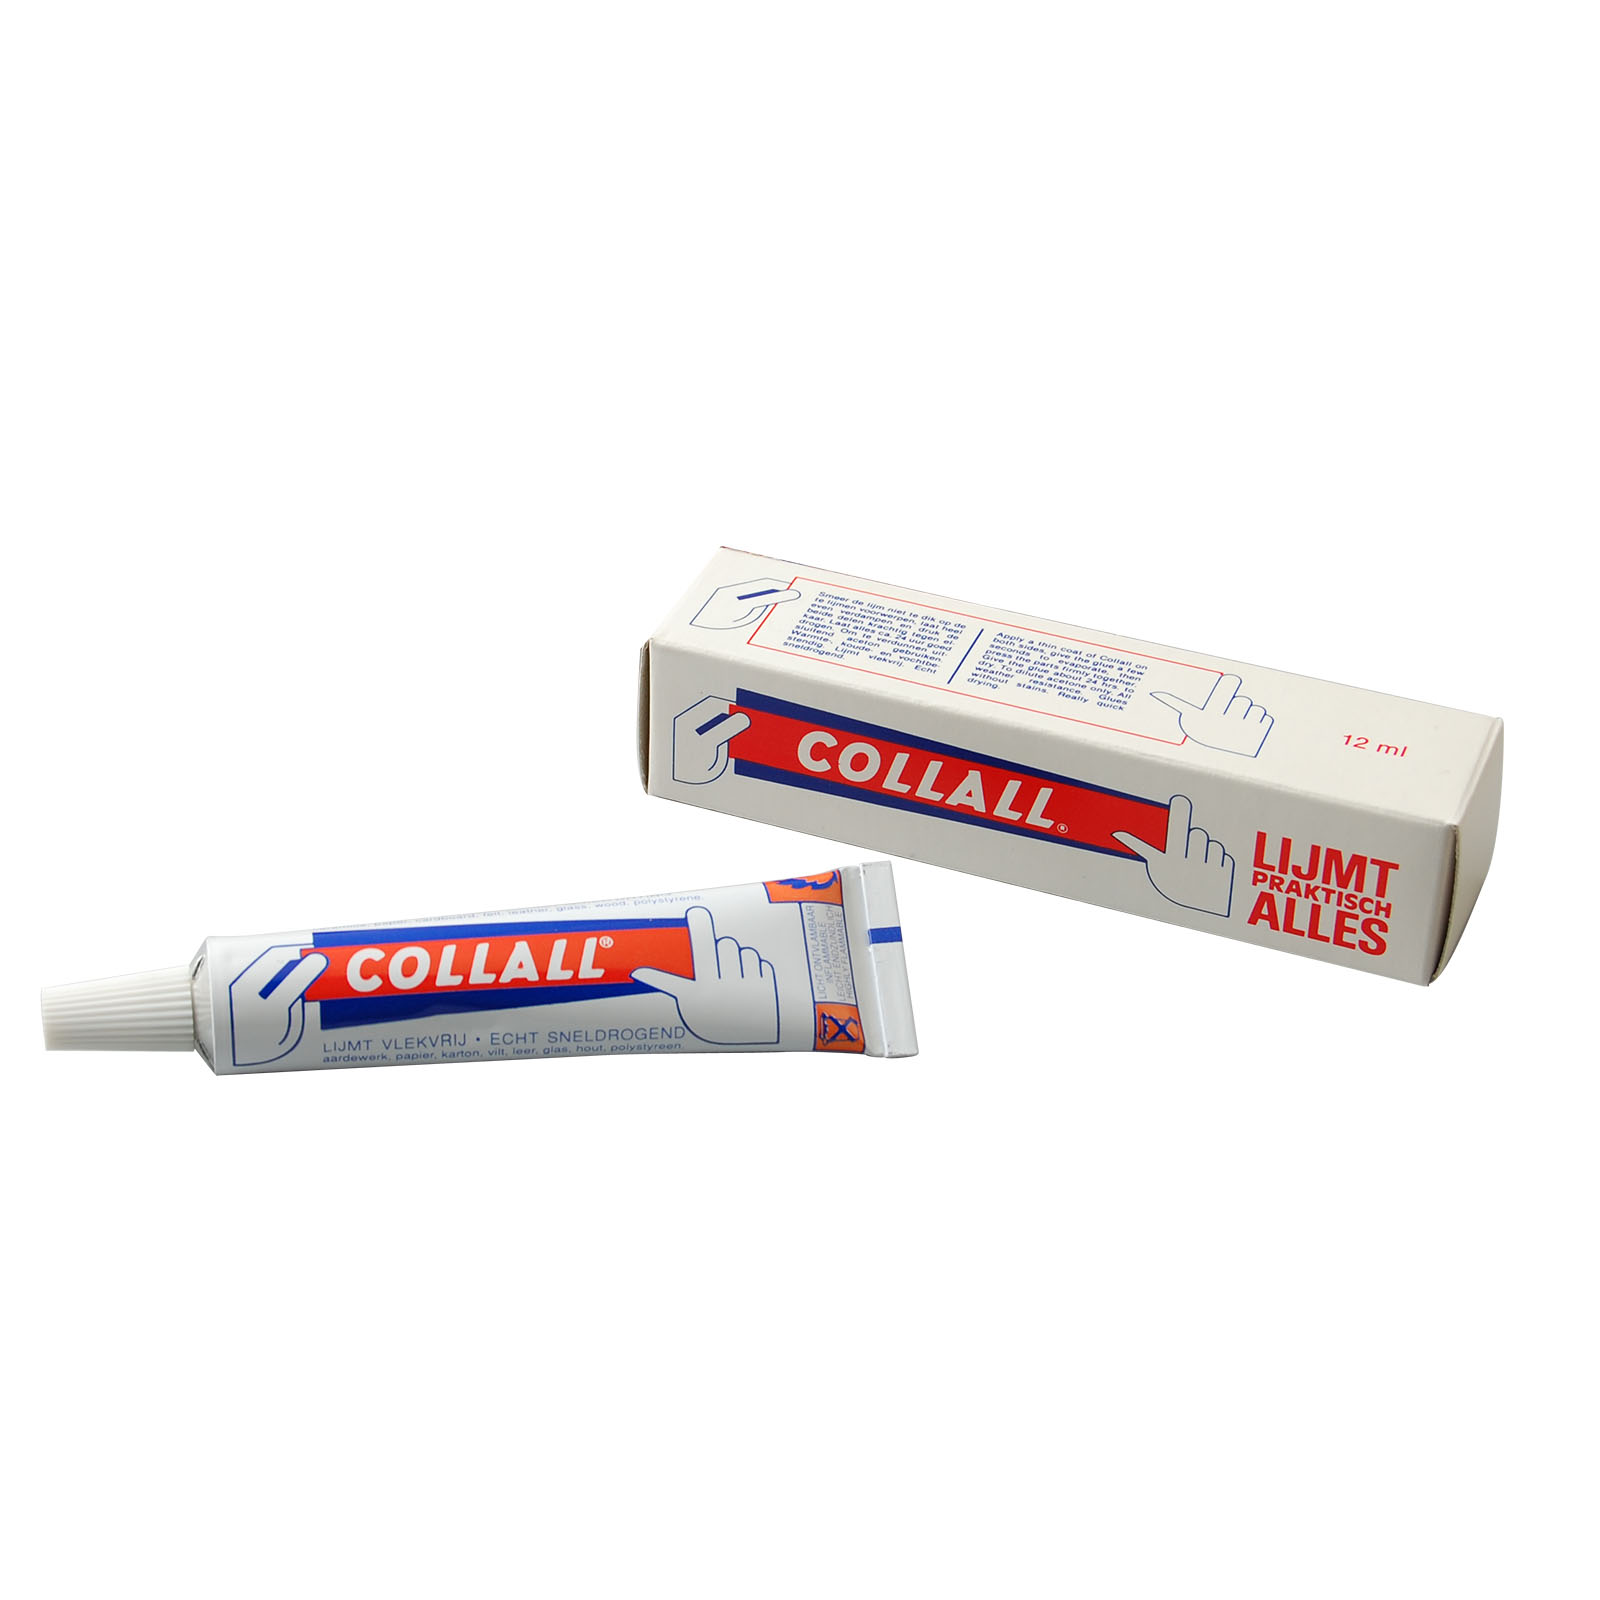 Collall • All purpose glue 12ml tube